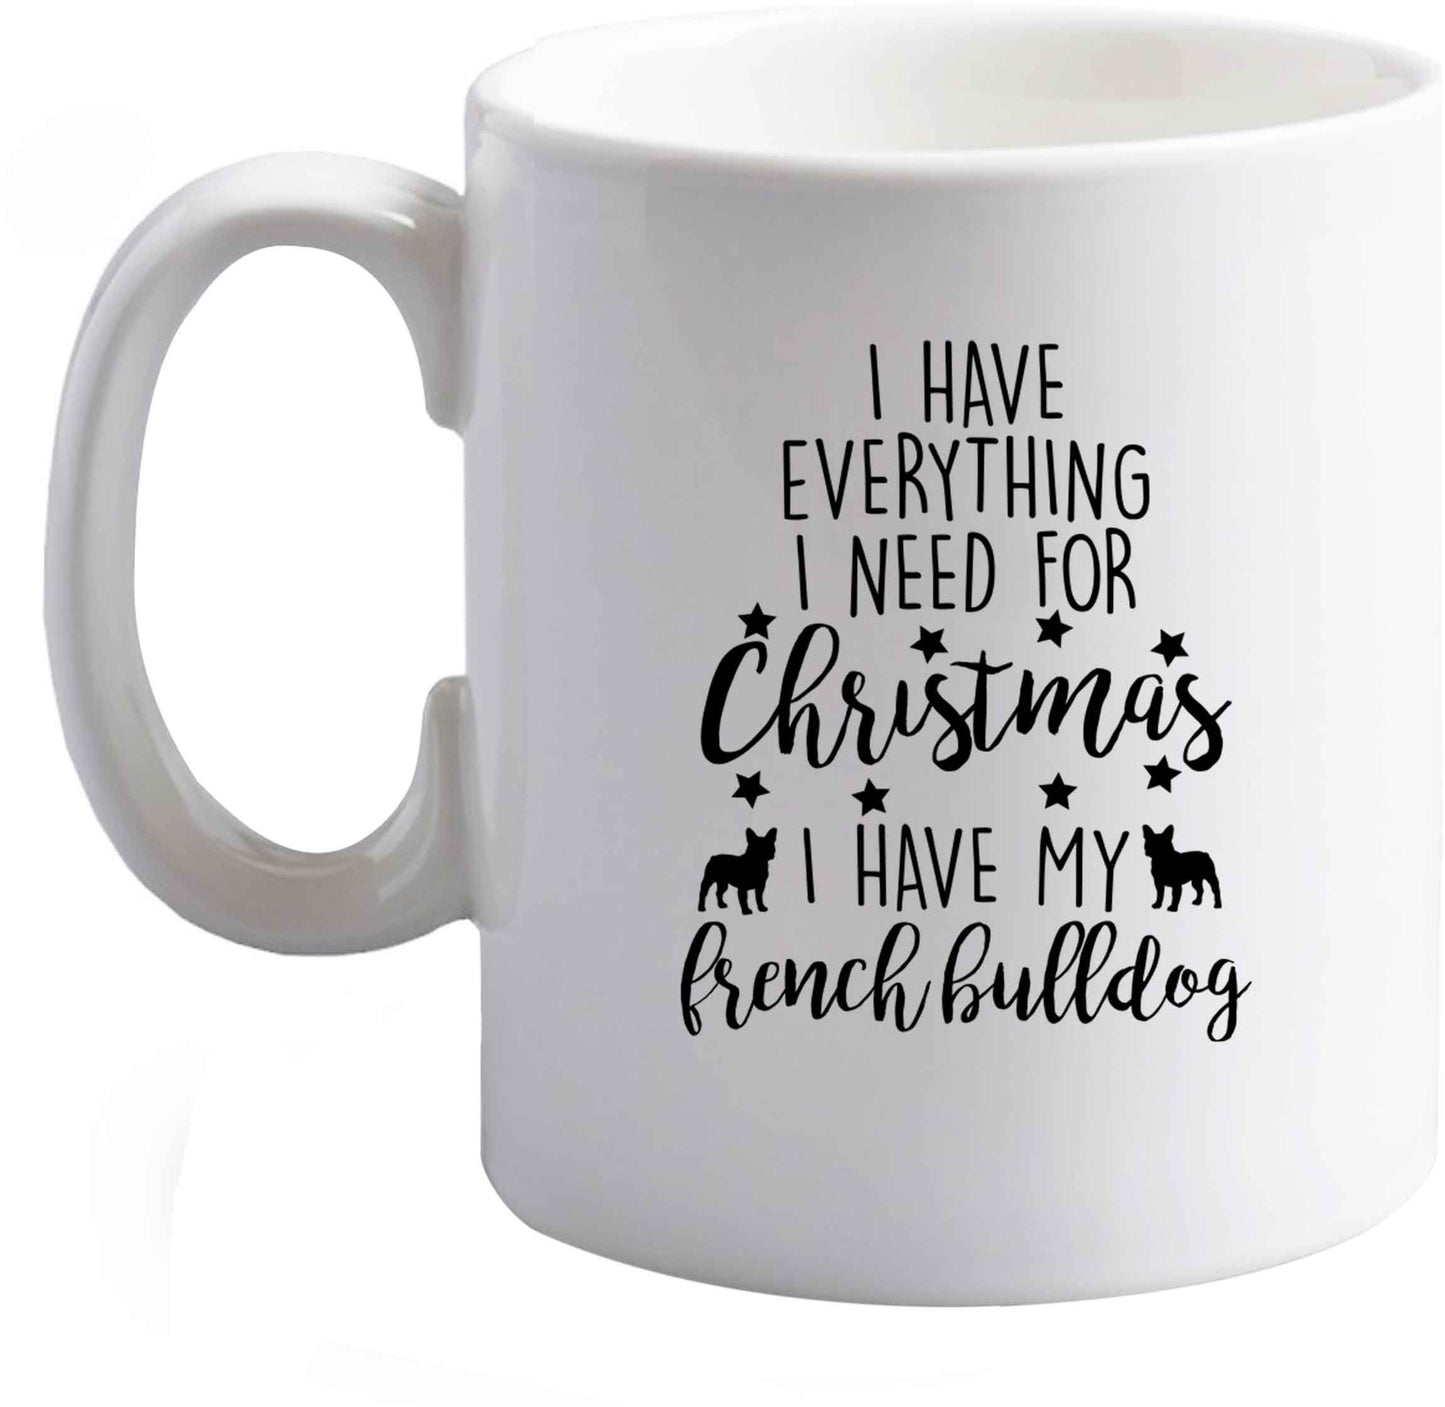 10 oz I have everything I need for Christmas I have my french bulldog ceramic mug right handed